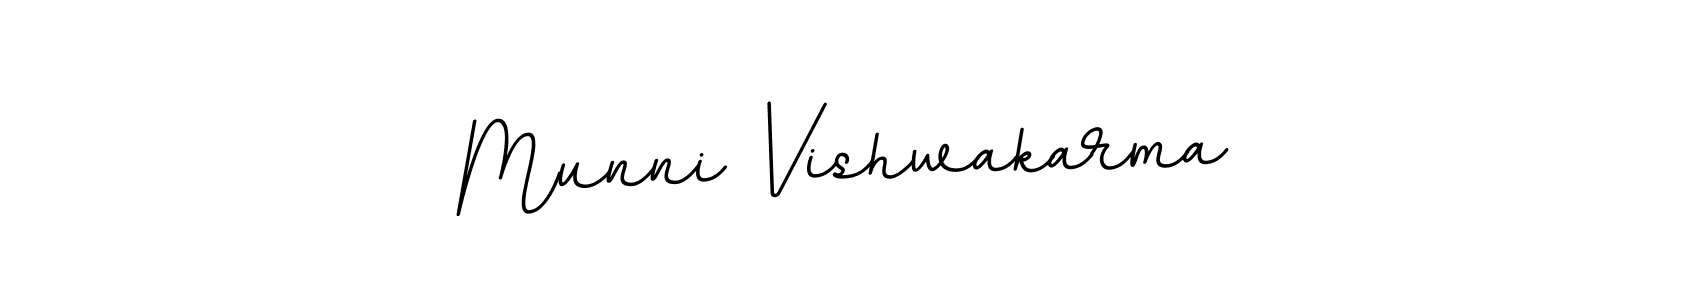 How to Draw Munni Vishwakarma signature style? BallpointsItalic-DORy9 is a latest design signature styles for name Munni Vishwakarma. Munni Vishwakarma signature style 11 images and pictures png